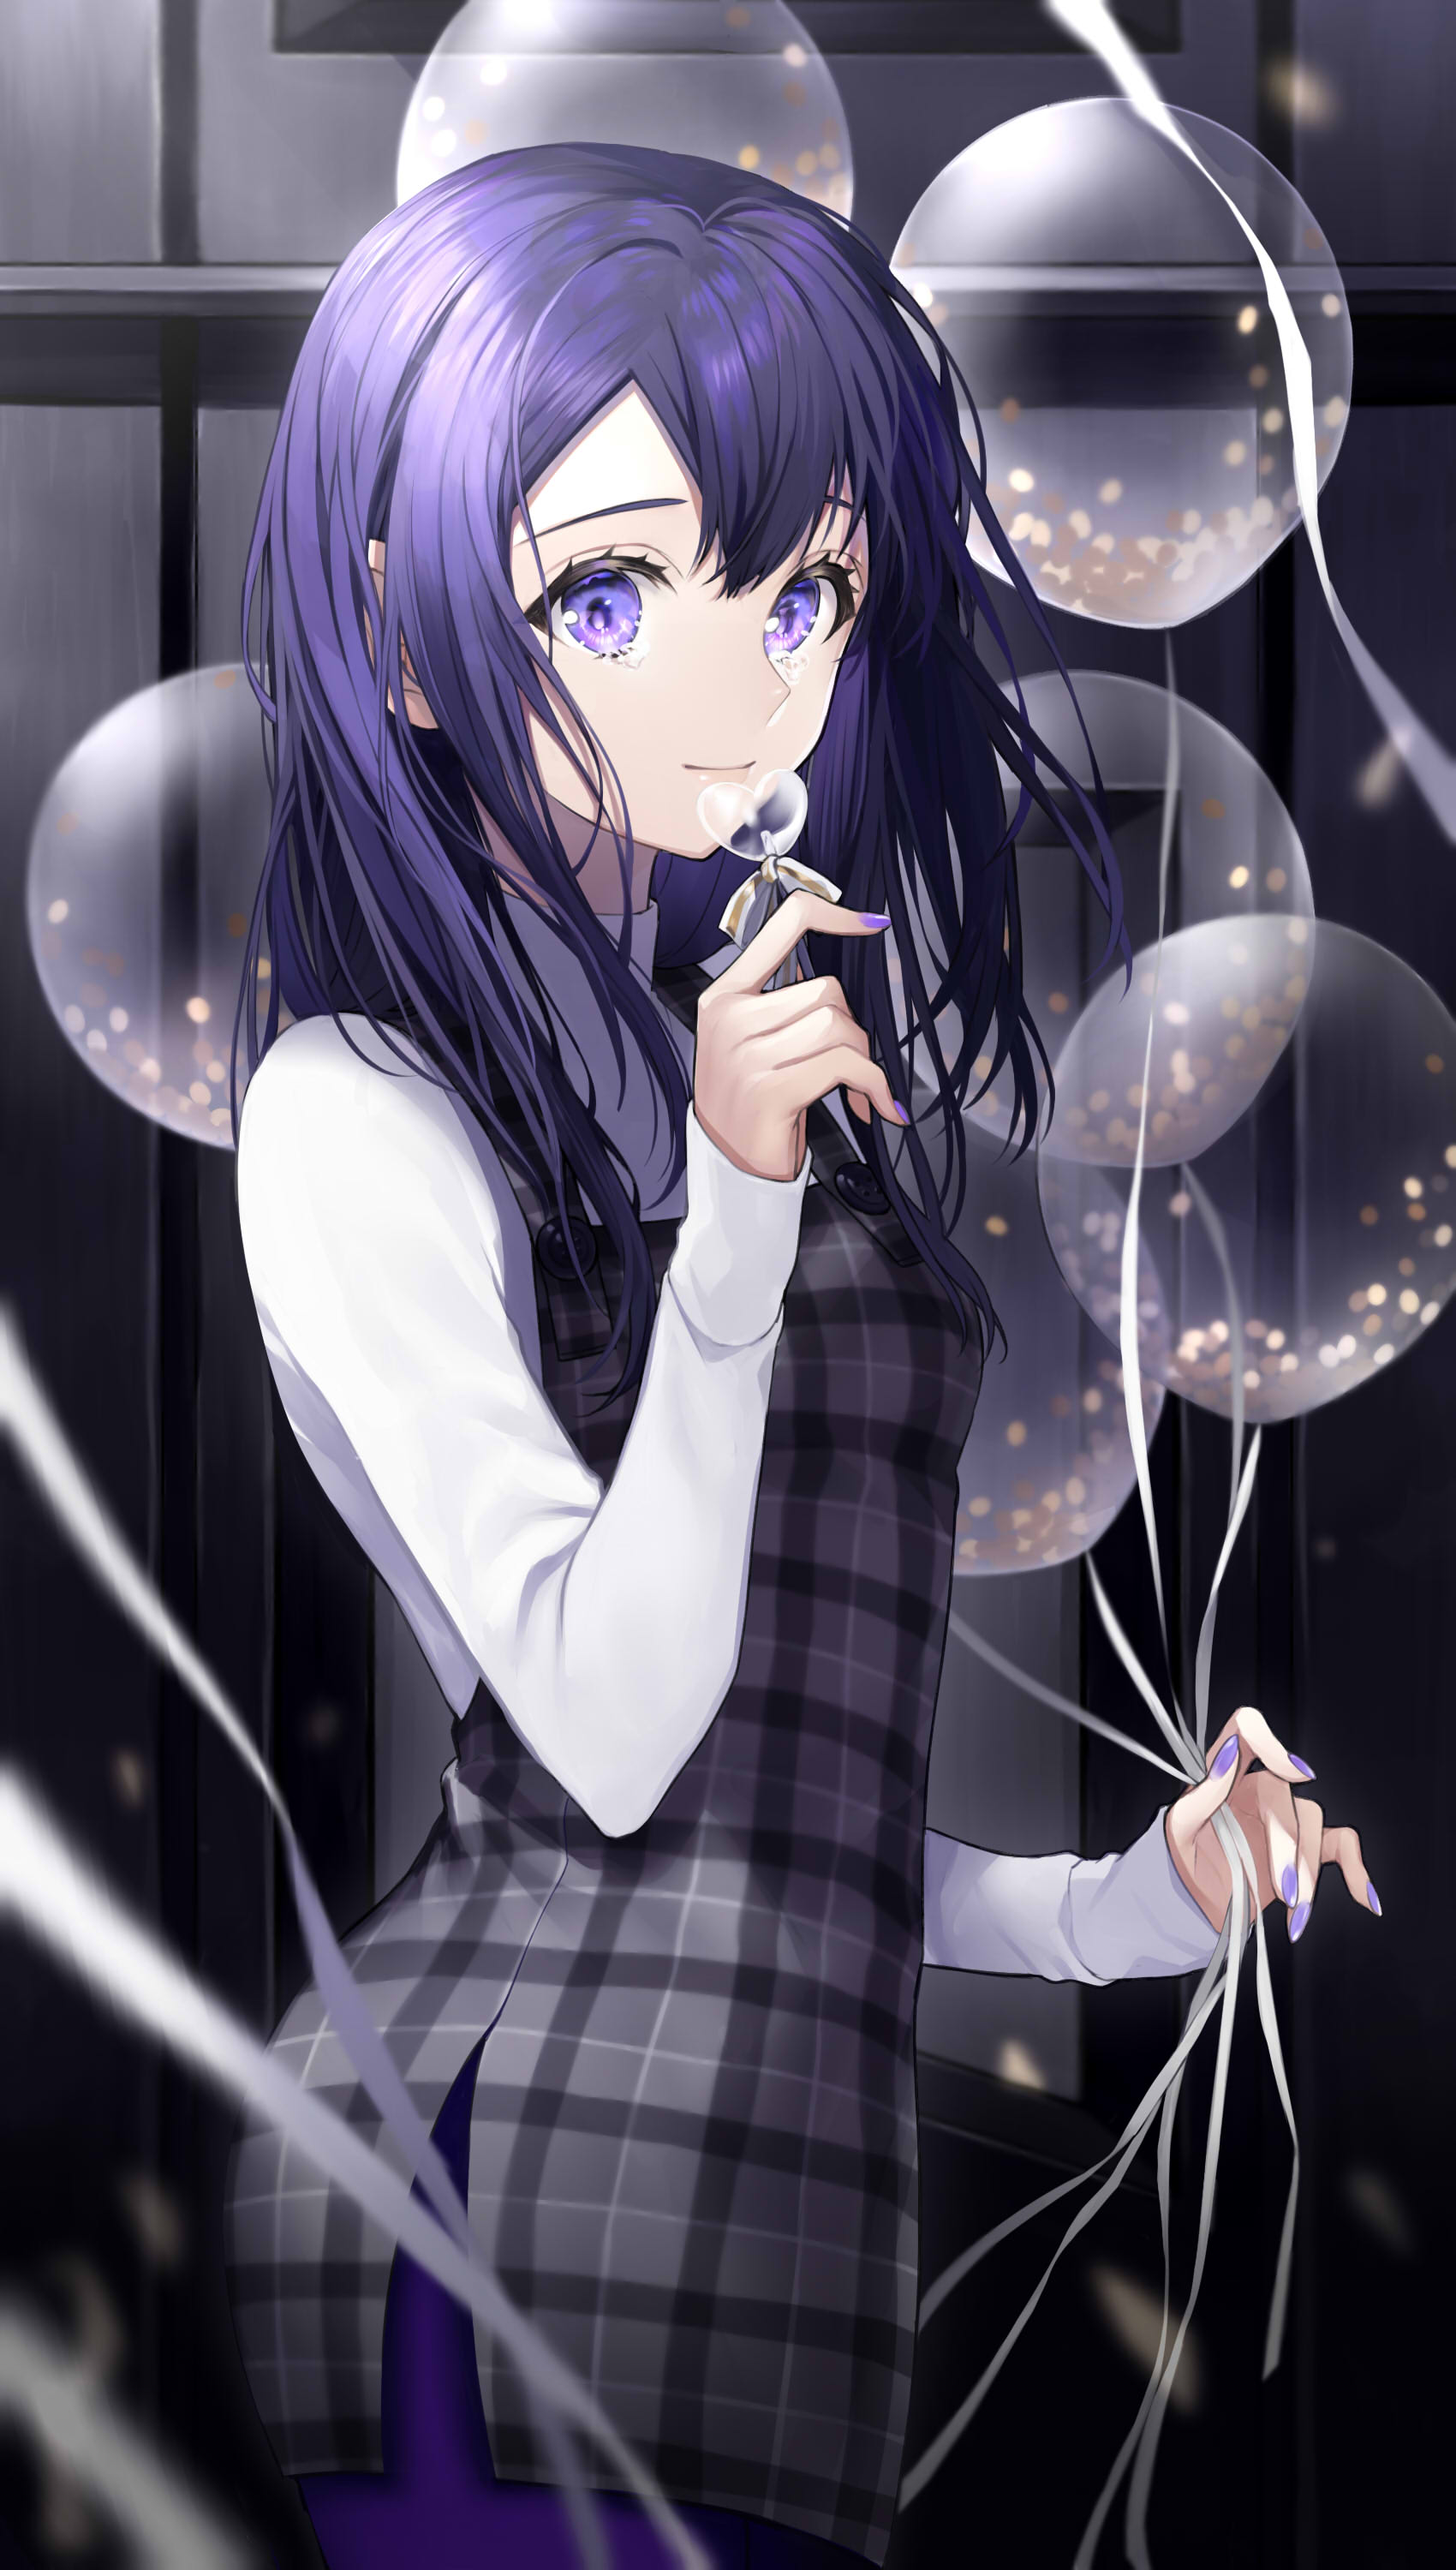 Anime 1700x3000 anime anime girls digital art artwork 2D portrait display Sogawa balloon dress purple hair purple eyes